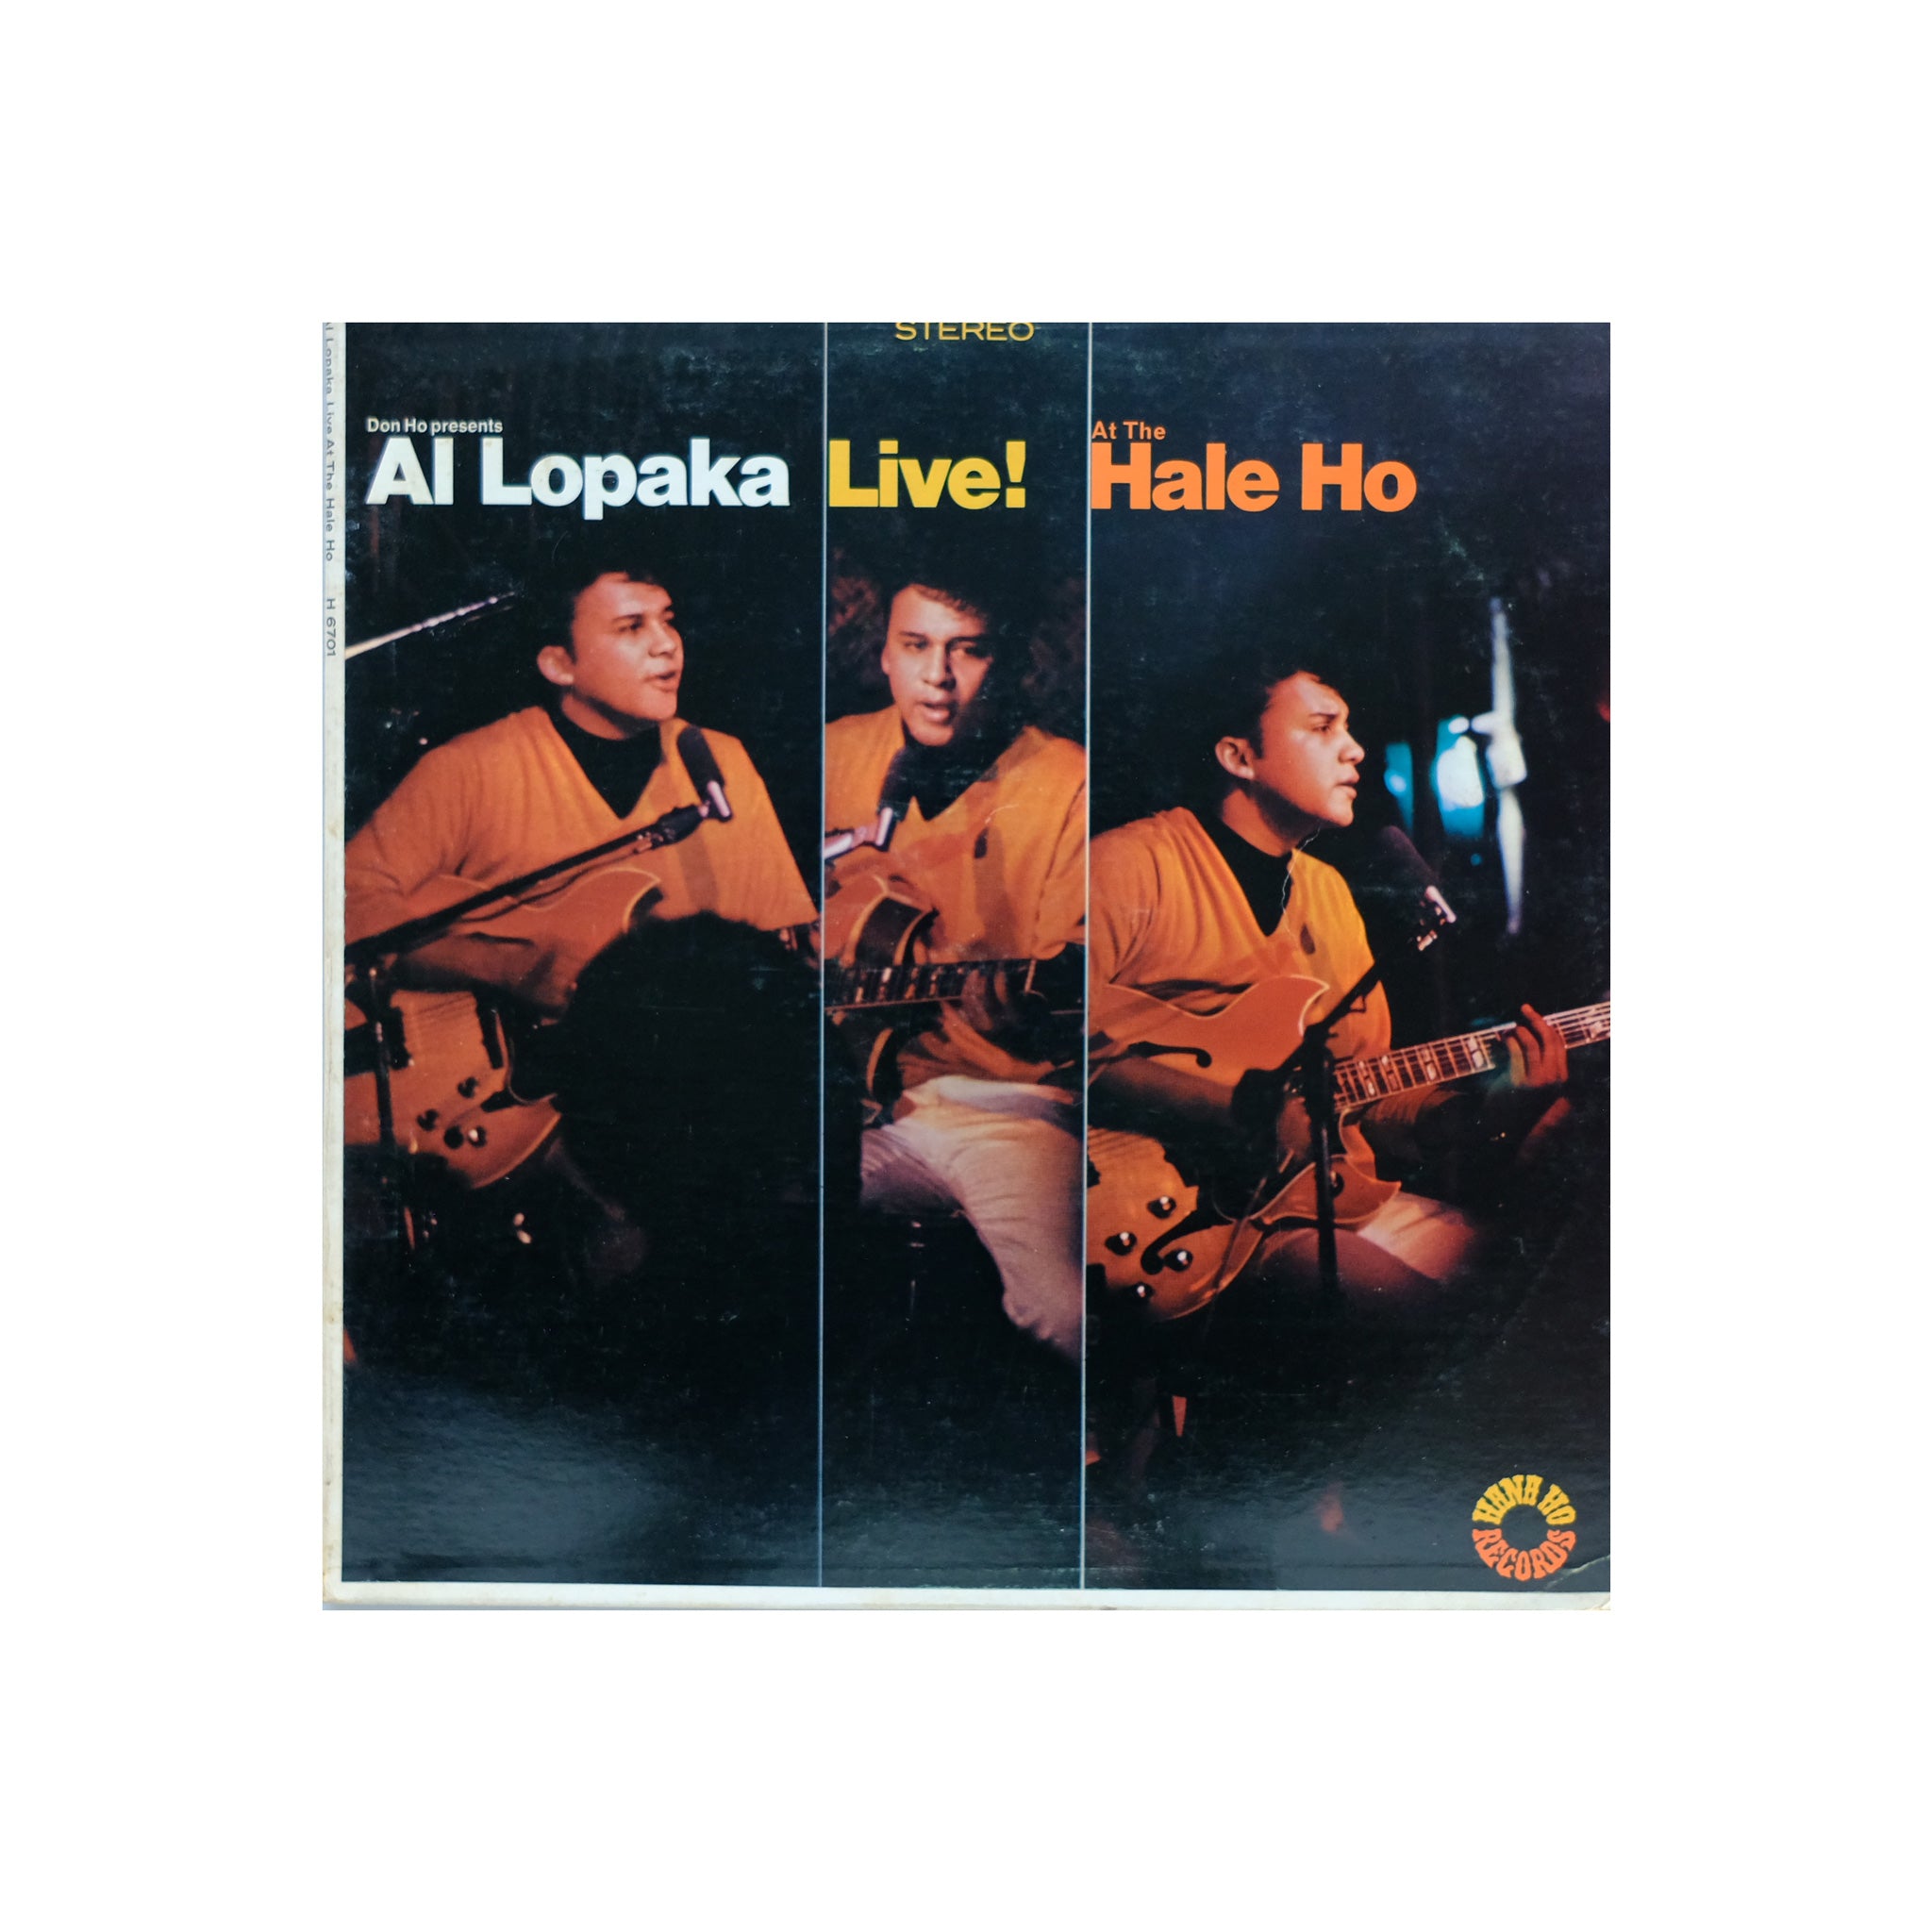 Al Lopaka - Live! at the Hale Ho